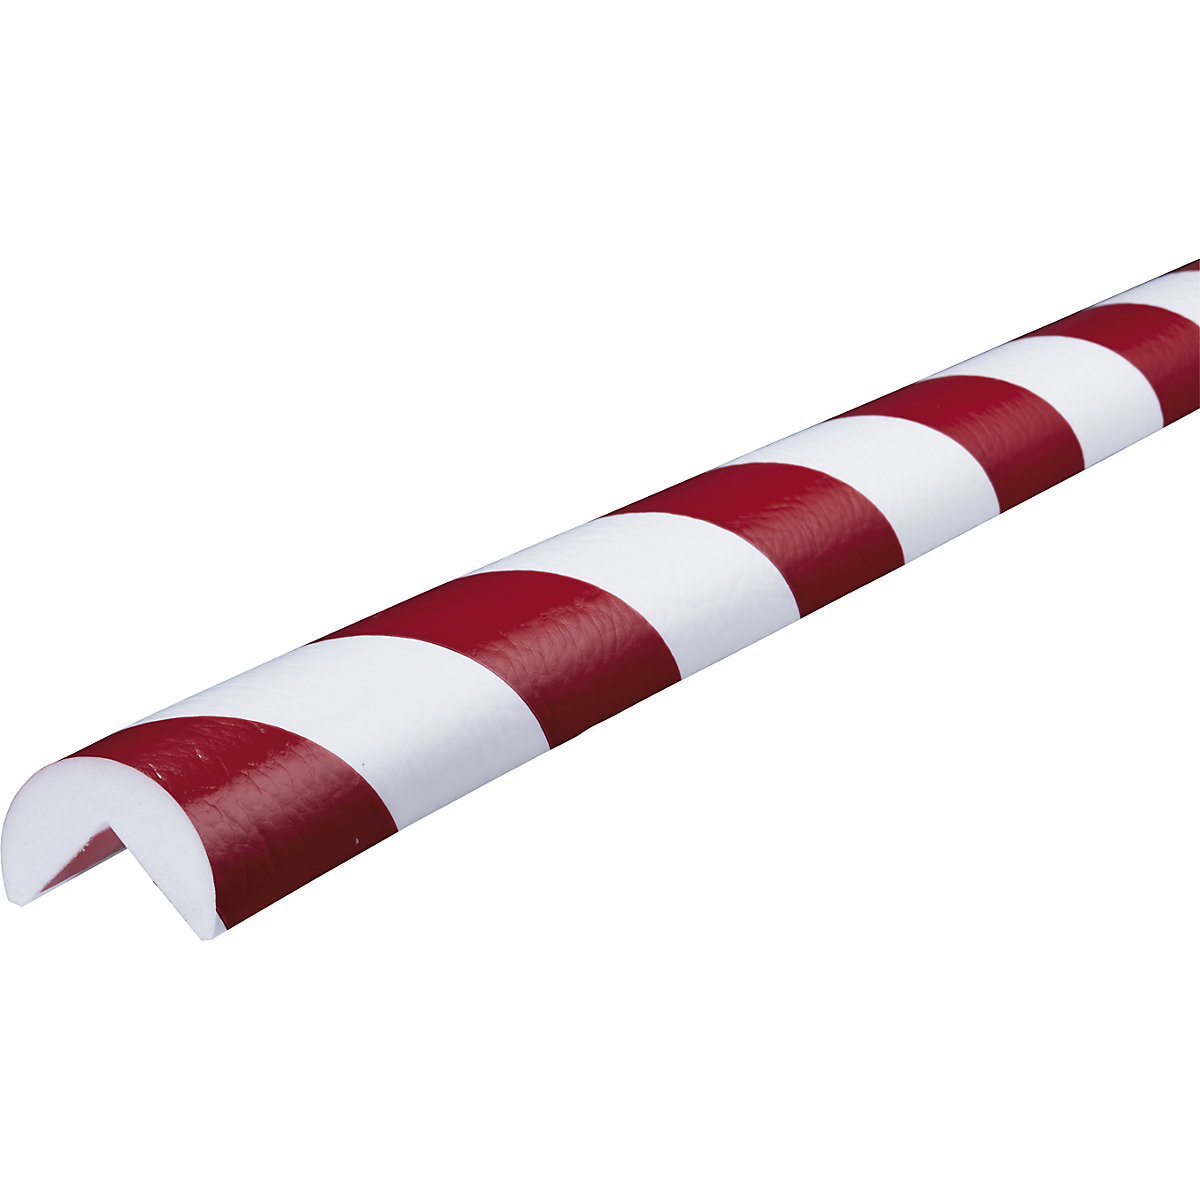 Knuffi®-hoekbescherming – SHG, type A, stuk van 1 m, rood/wit-14